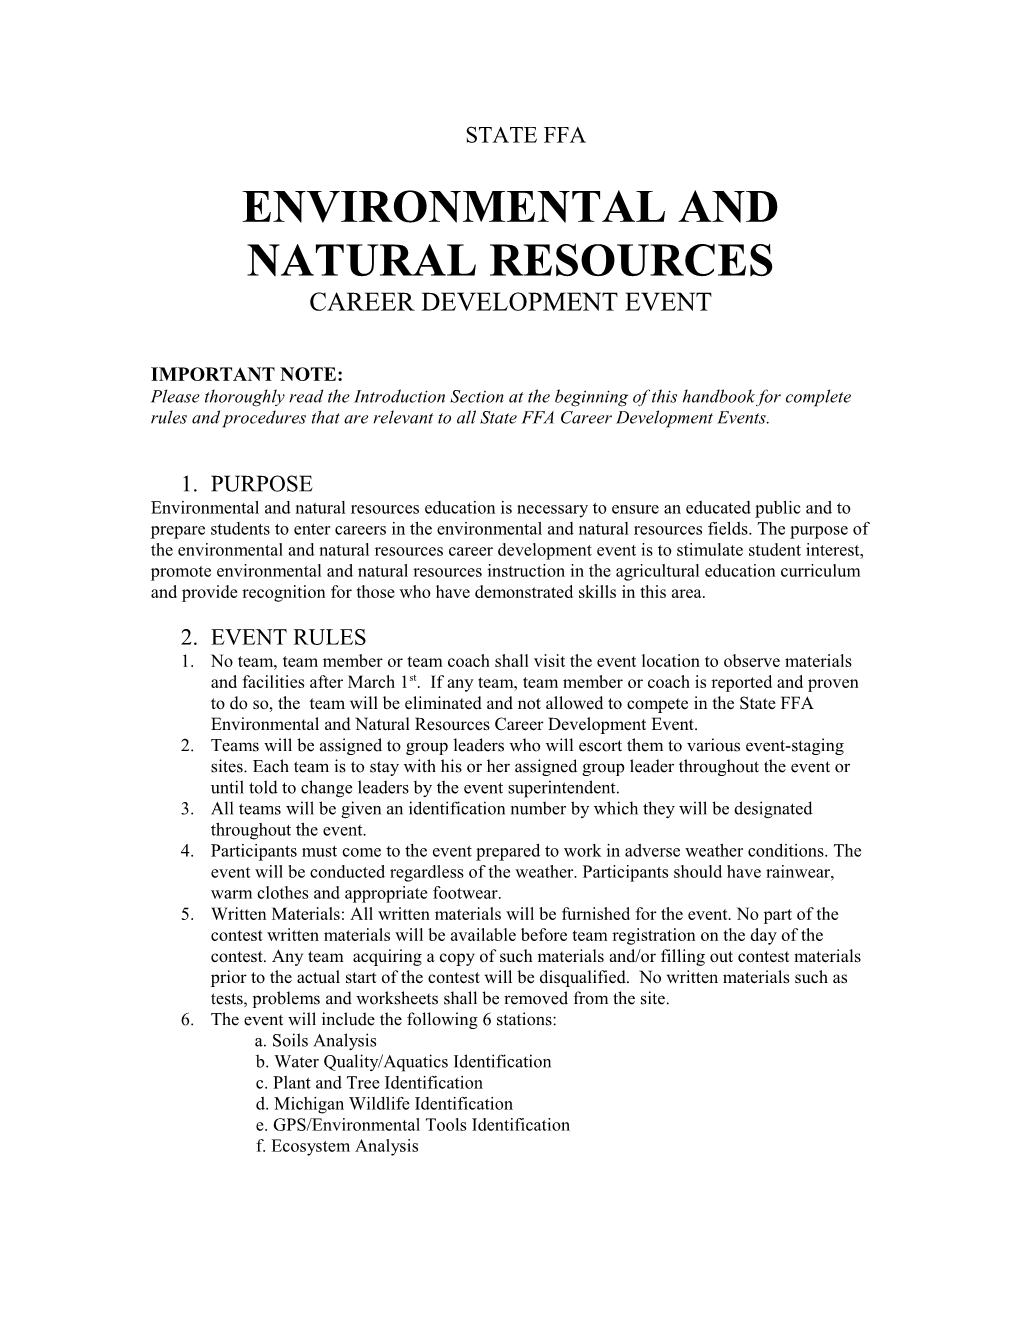 Environmental and Natural Resources